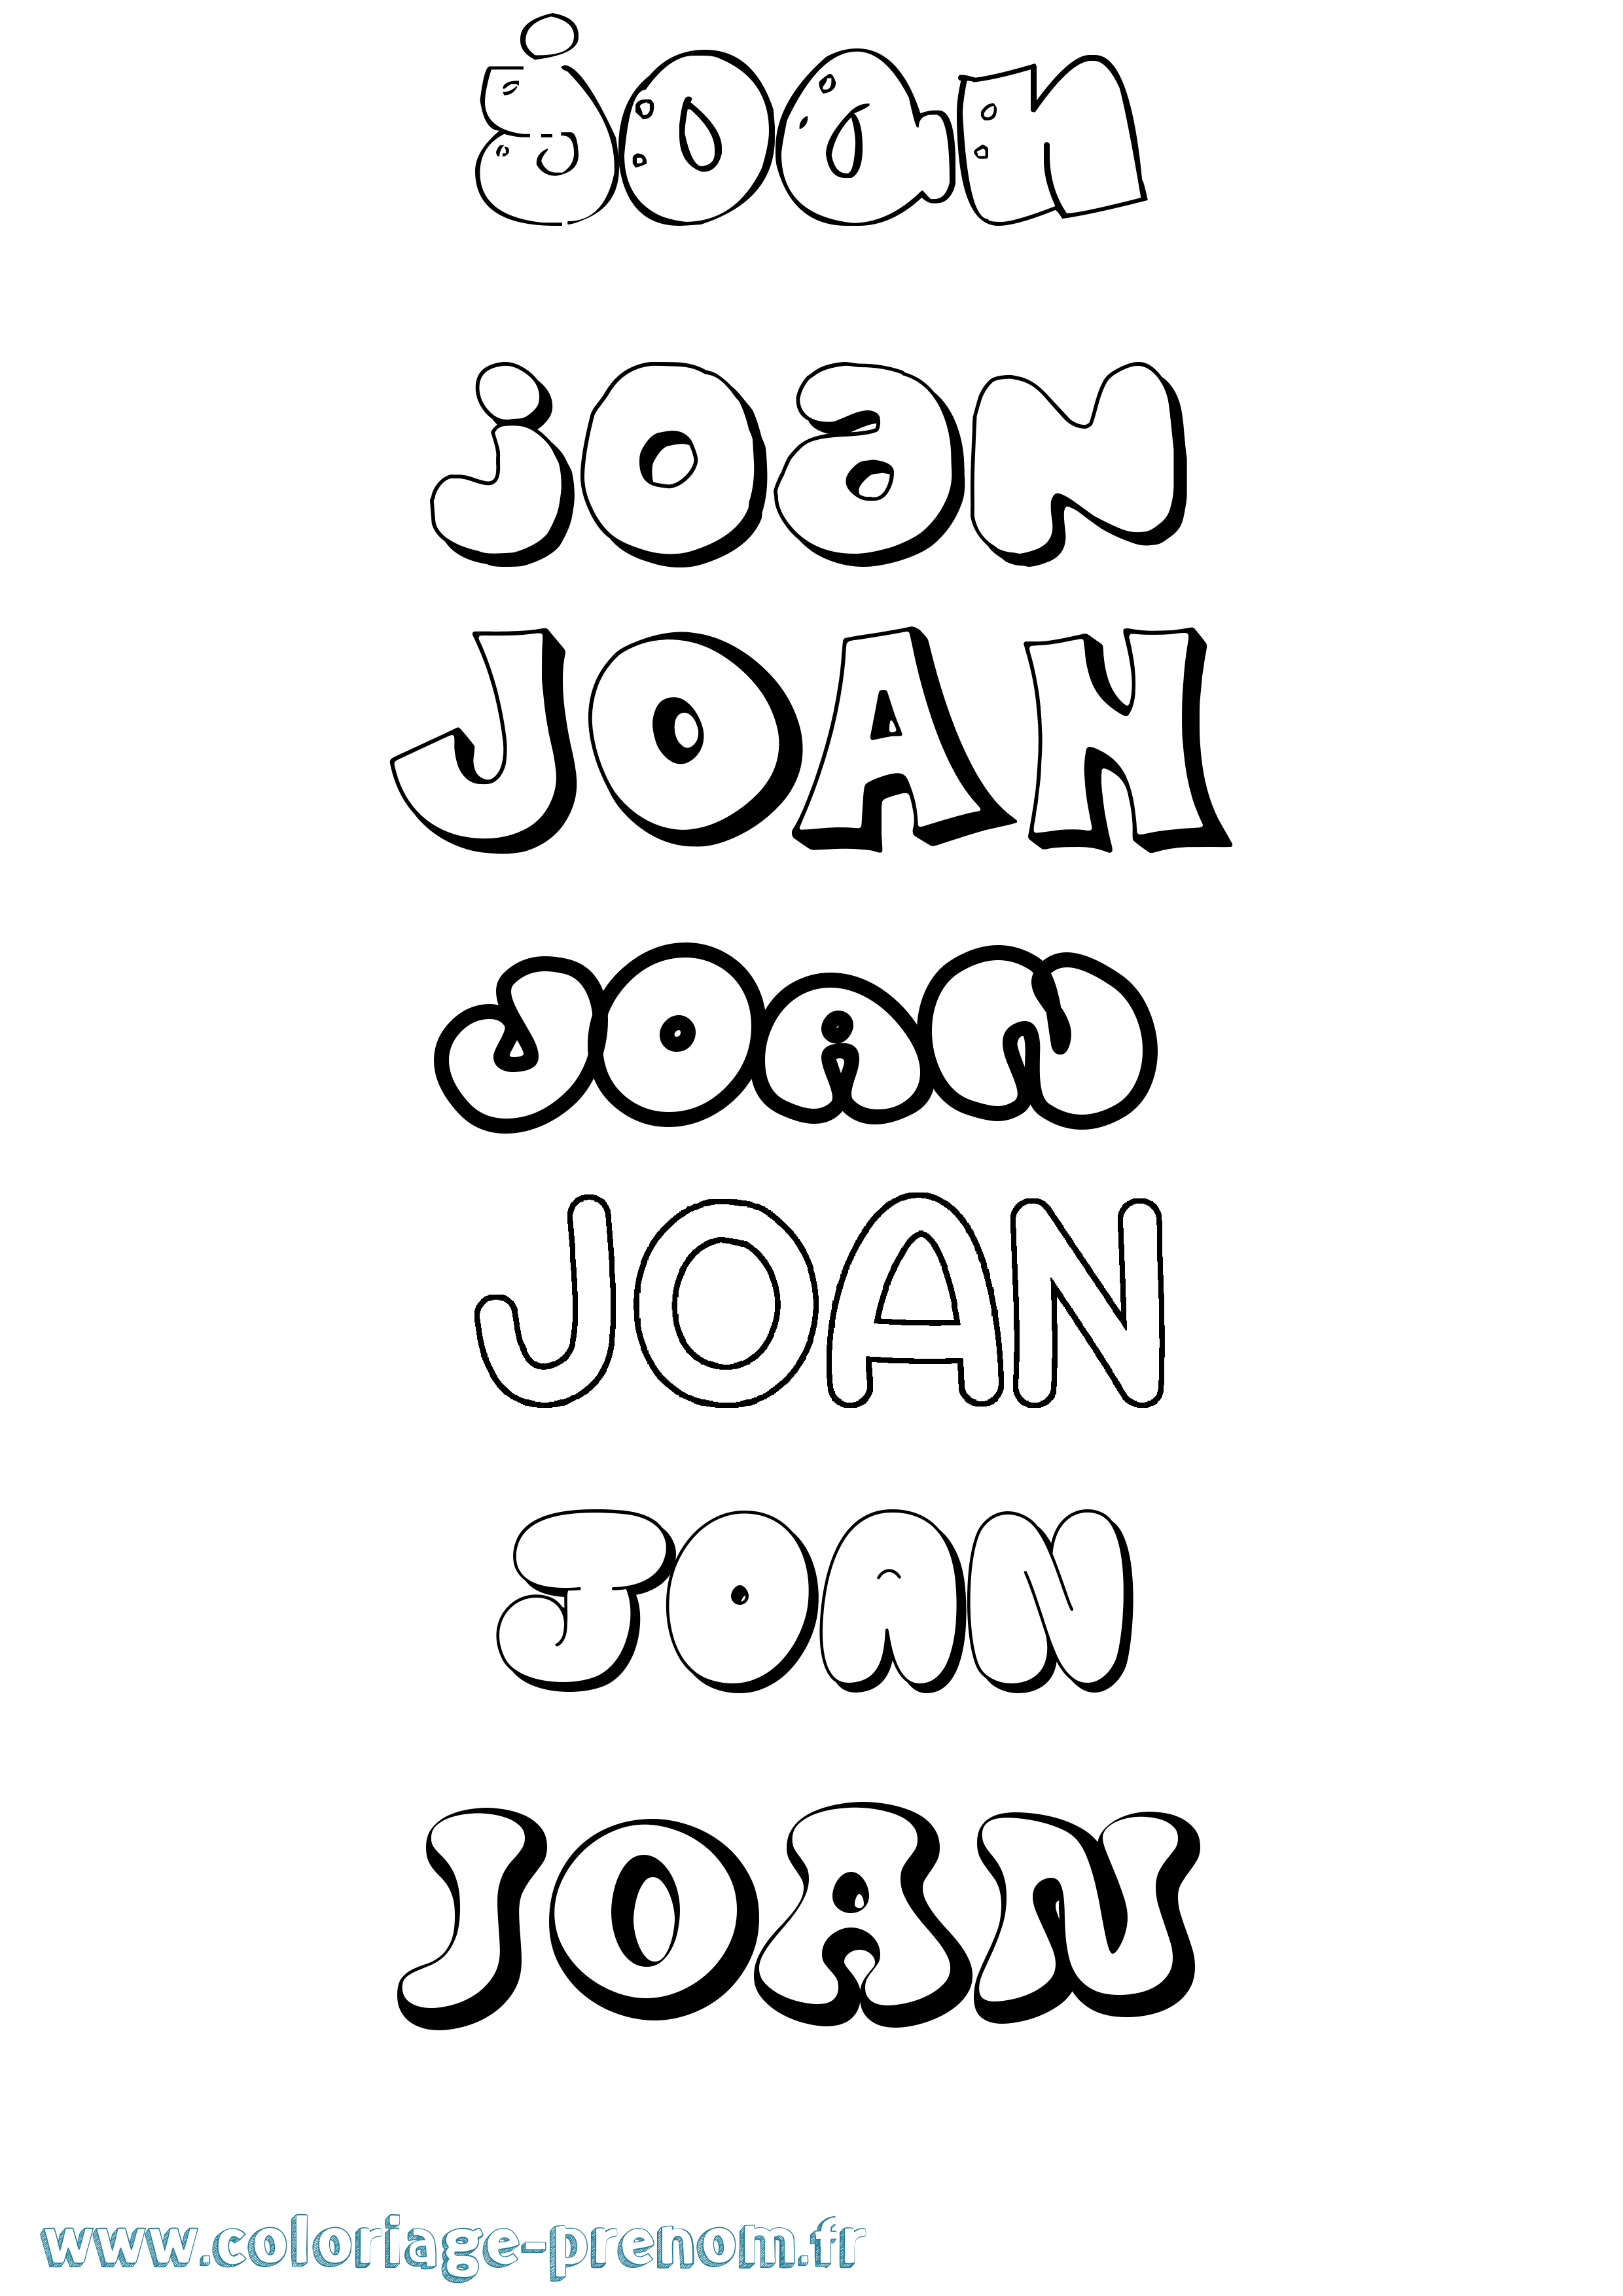 Coloriage prénom Joan Bubble